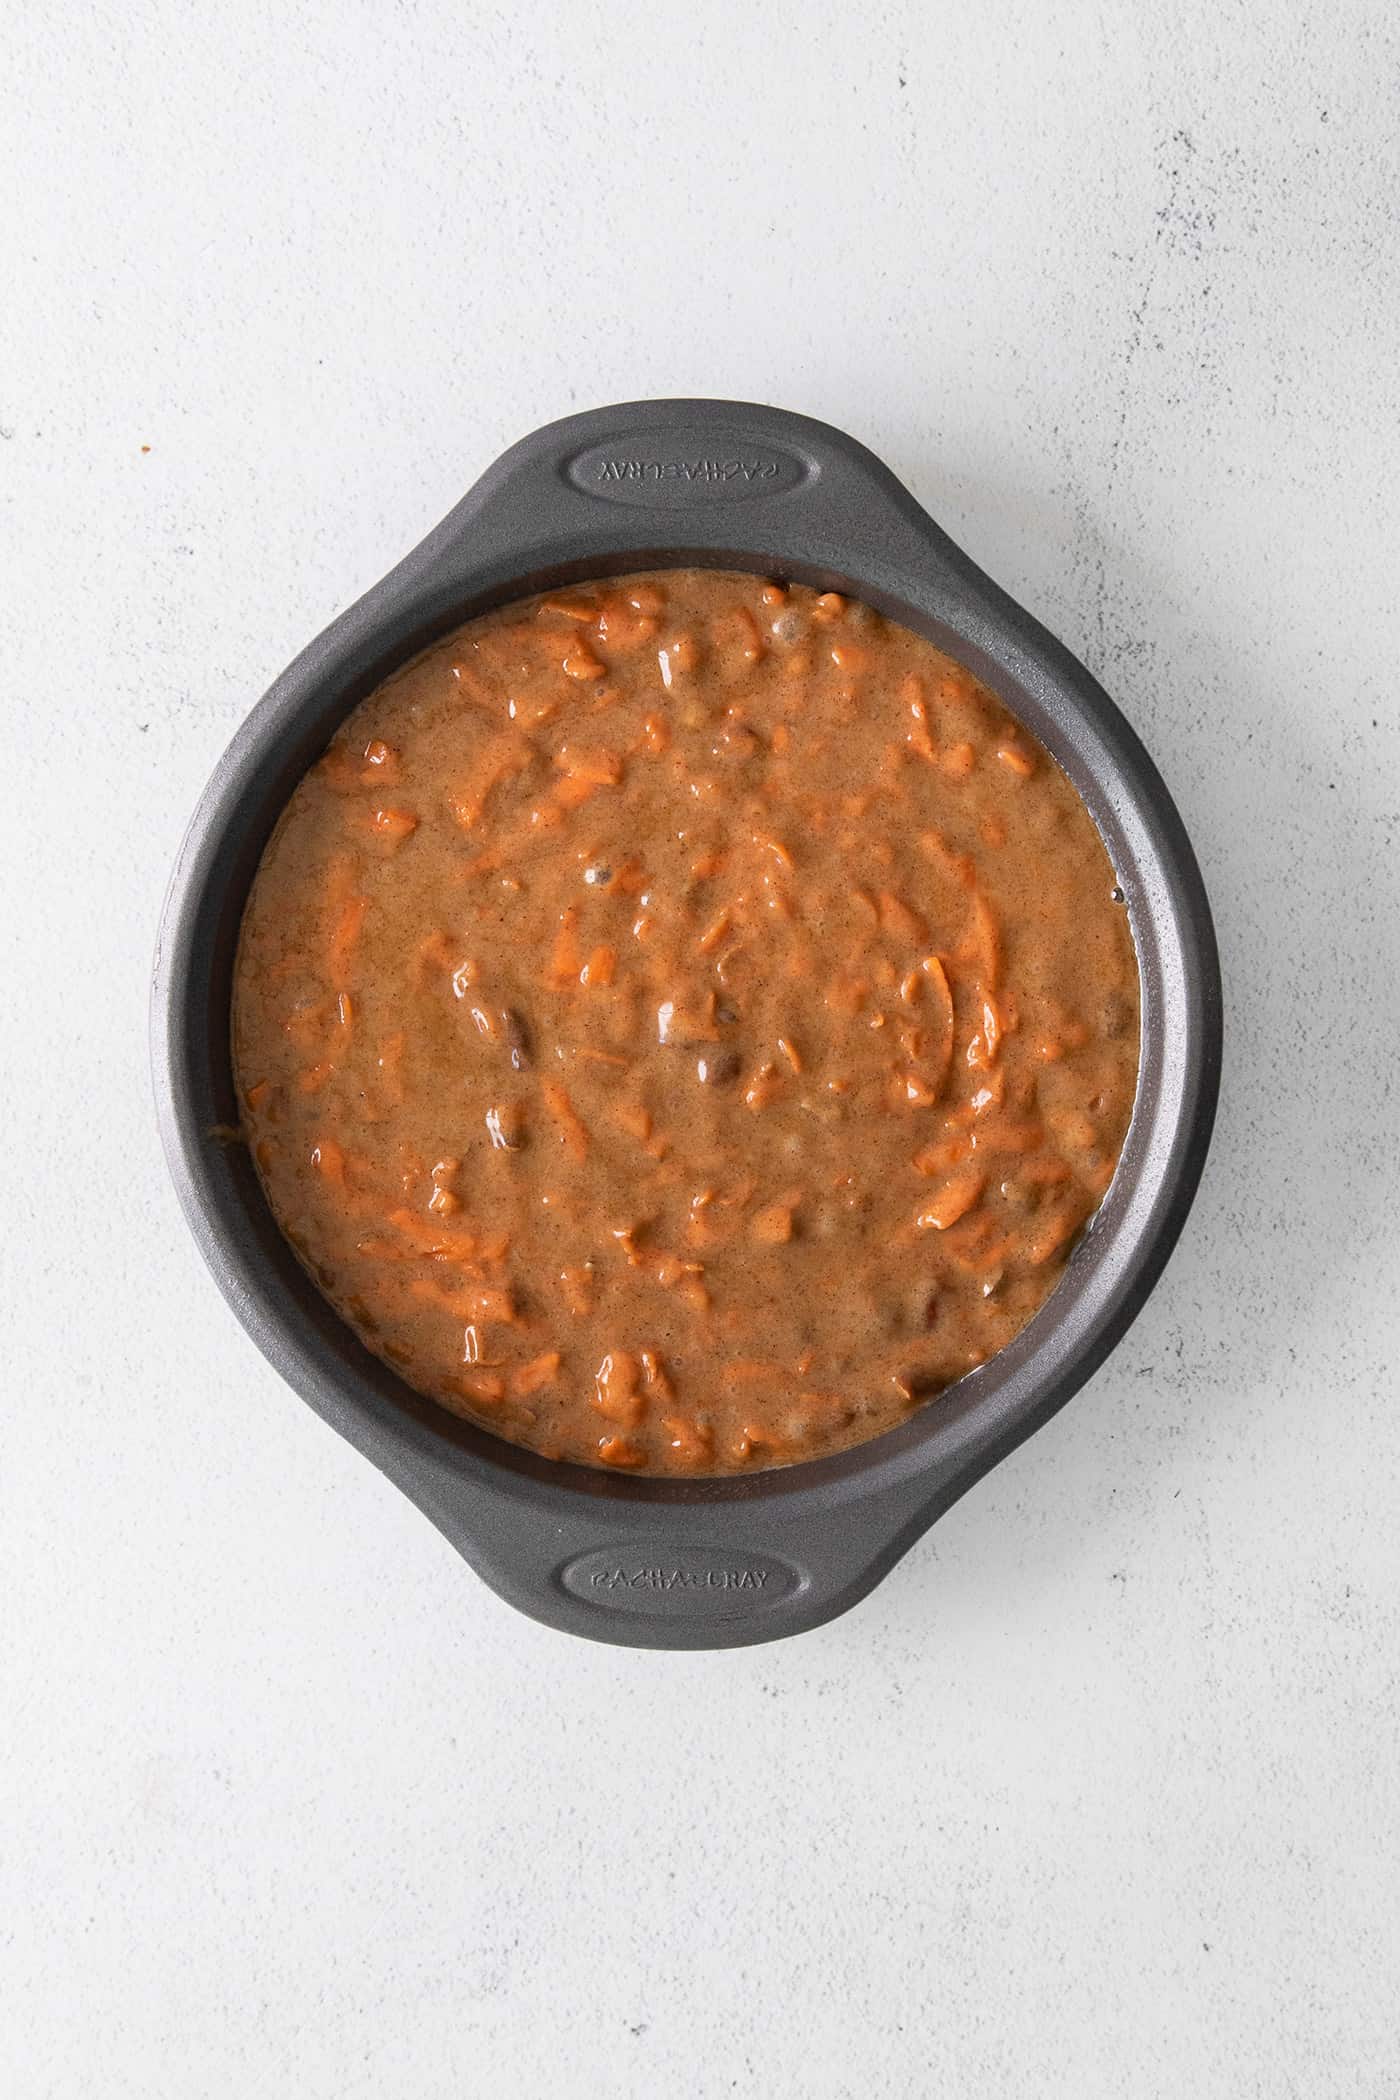 Carrot cake batter in a silver cake pan